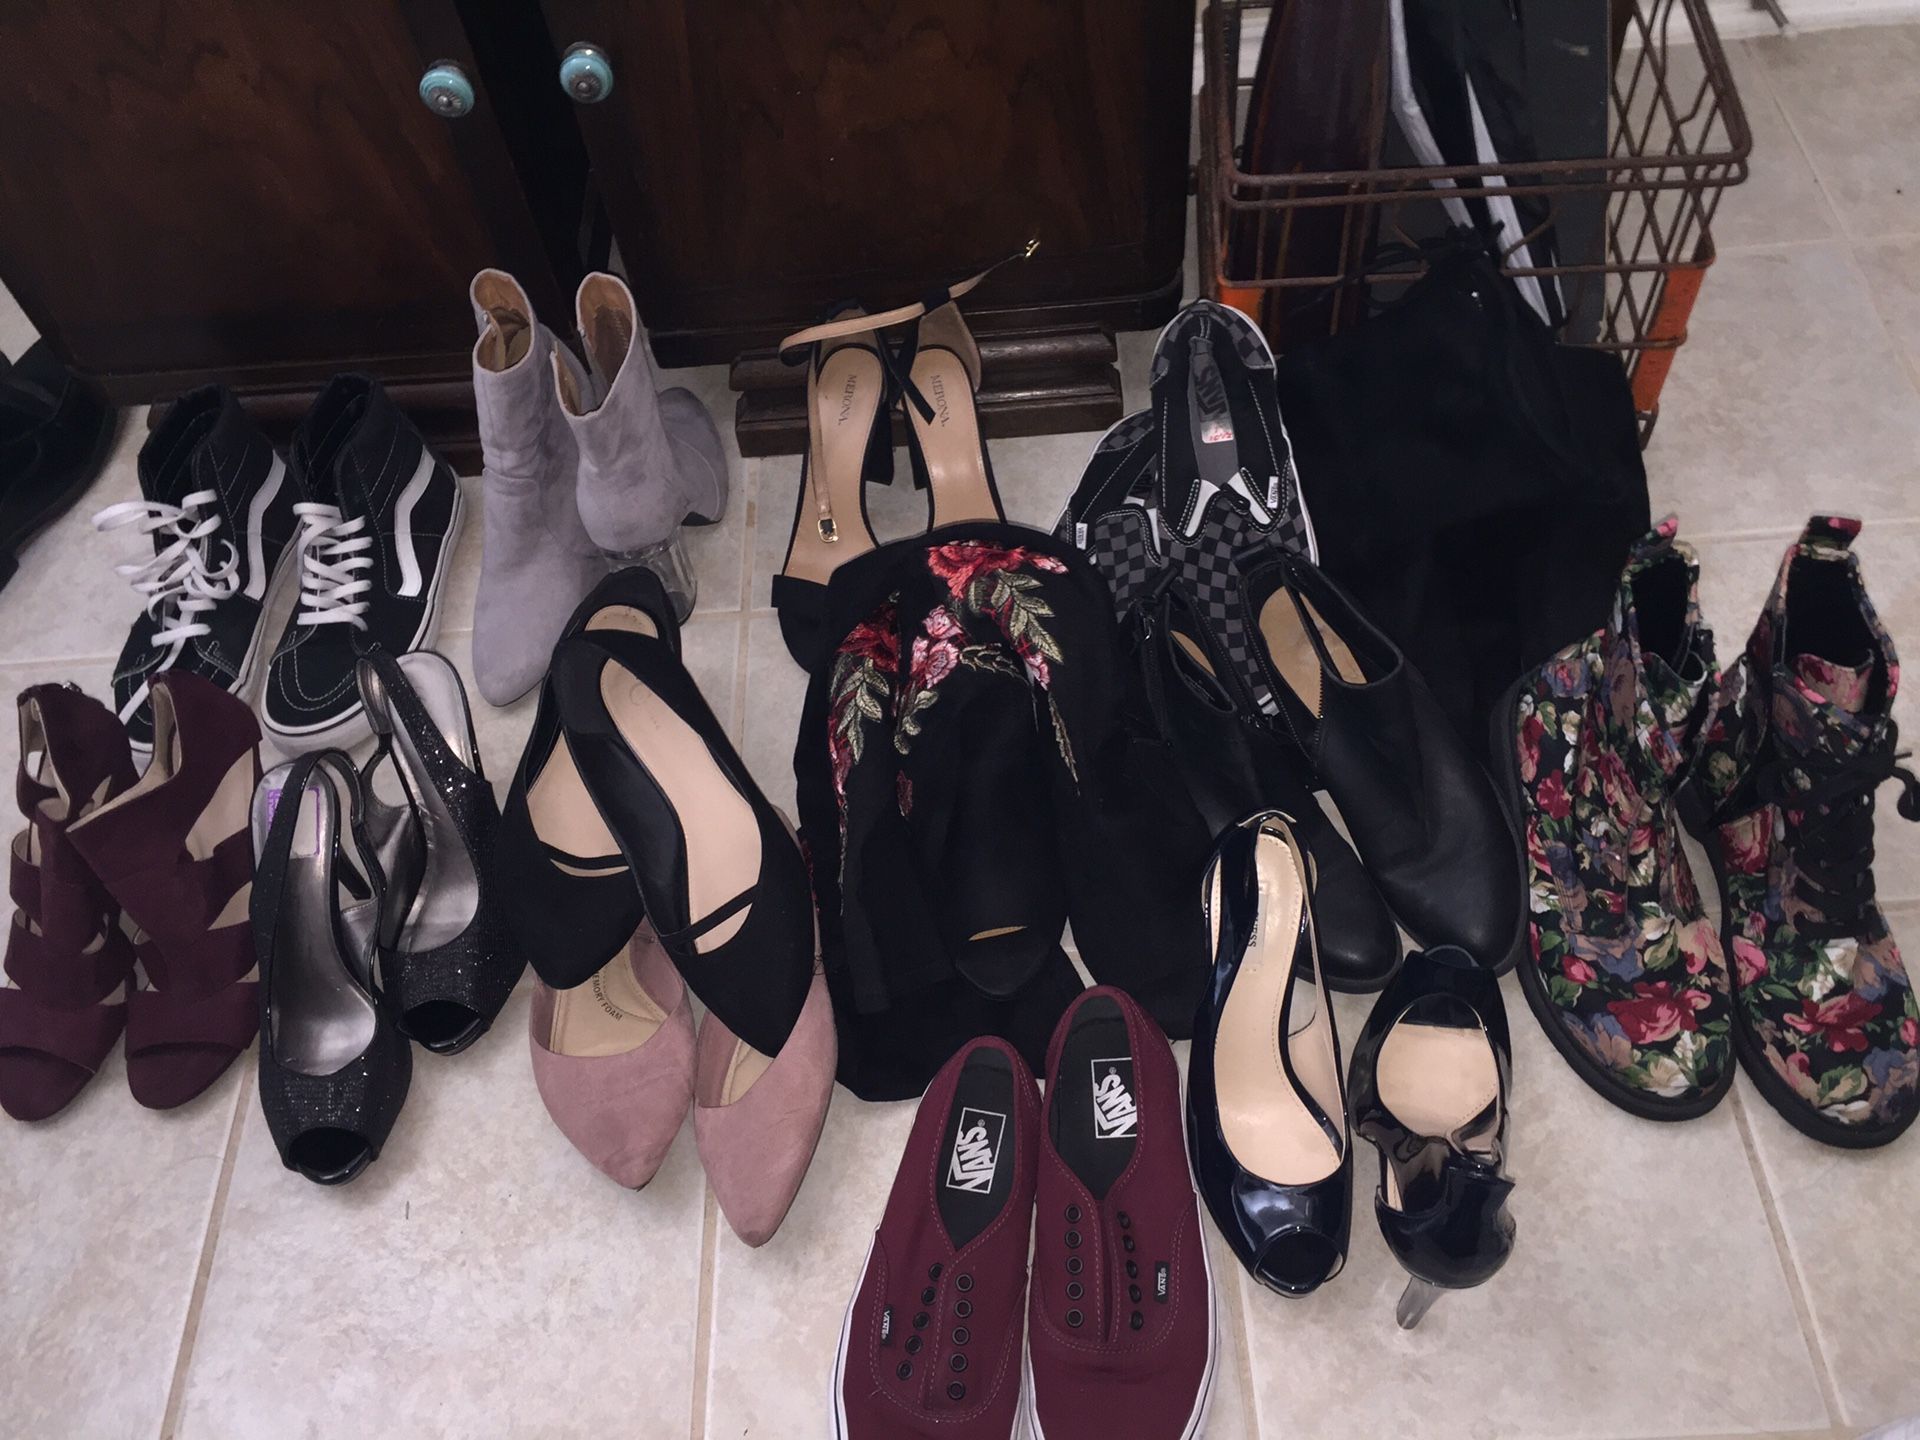 Women’s shoes/vans/heels/boots/flats size 10-11